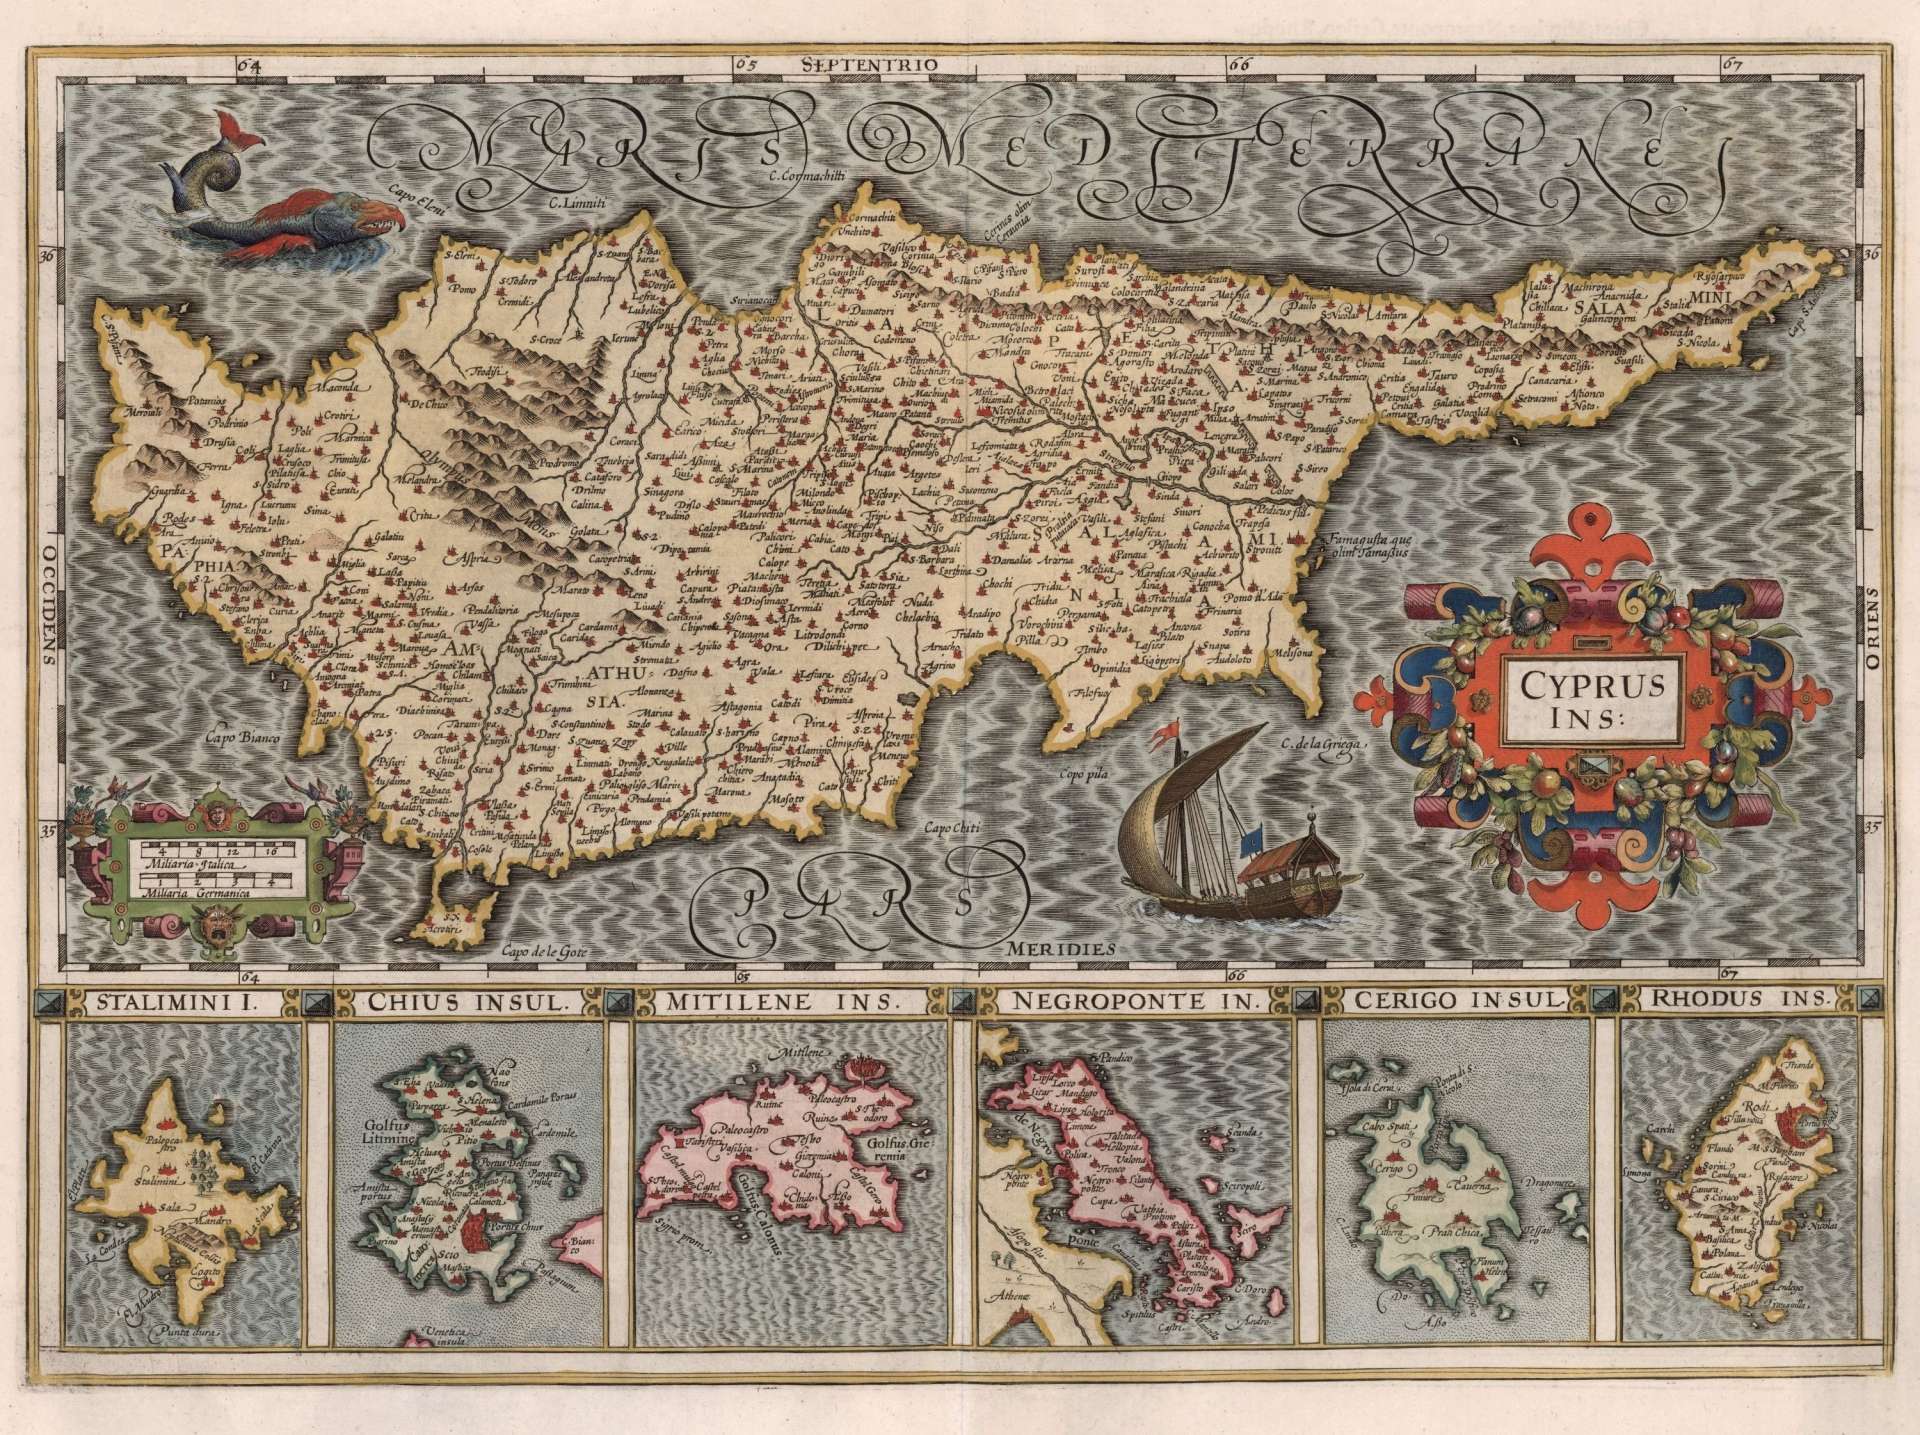 CYPRUS_INS_Gerardi_Mercatoris_Atlas_Amsterdam_1630.jpg